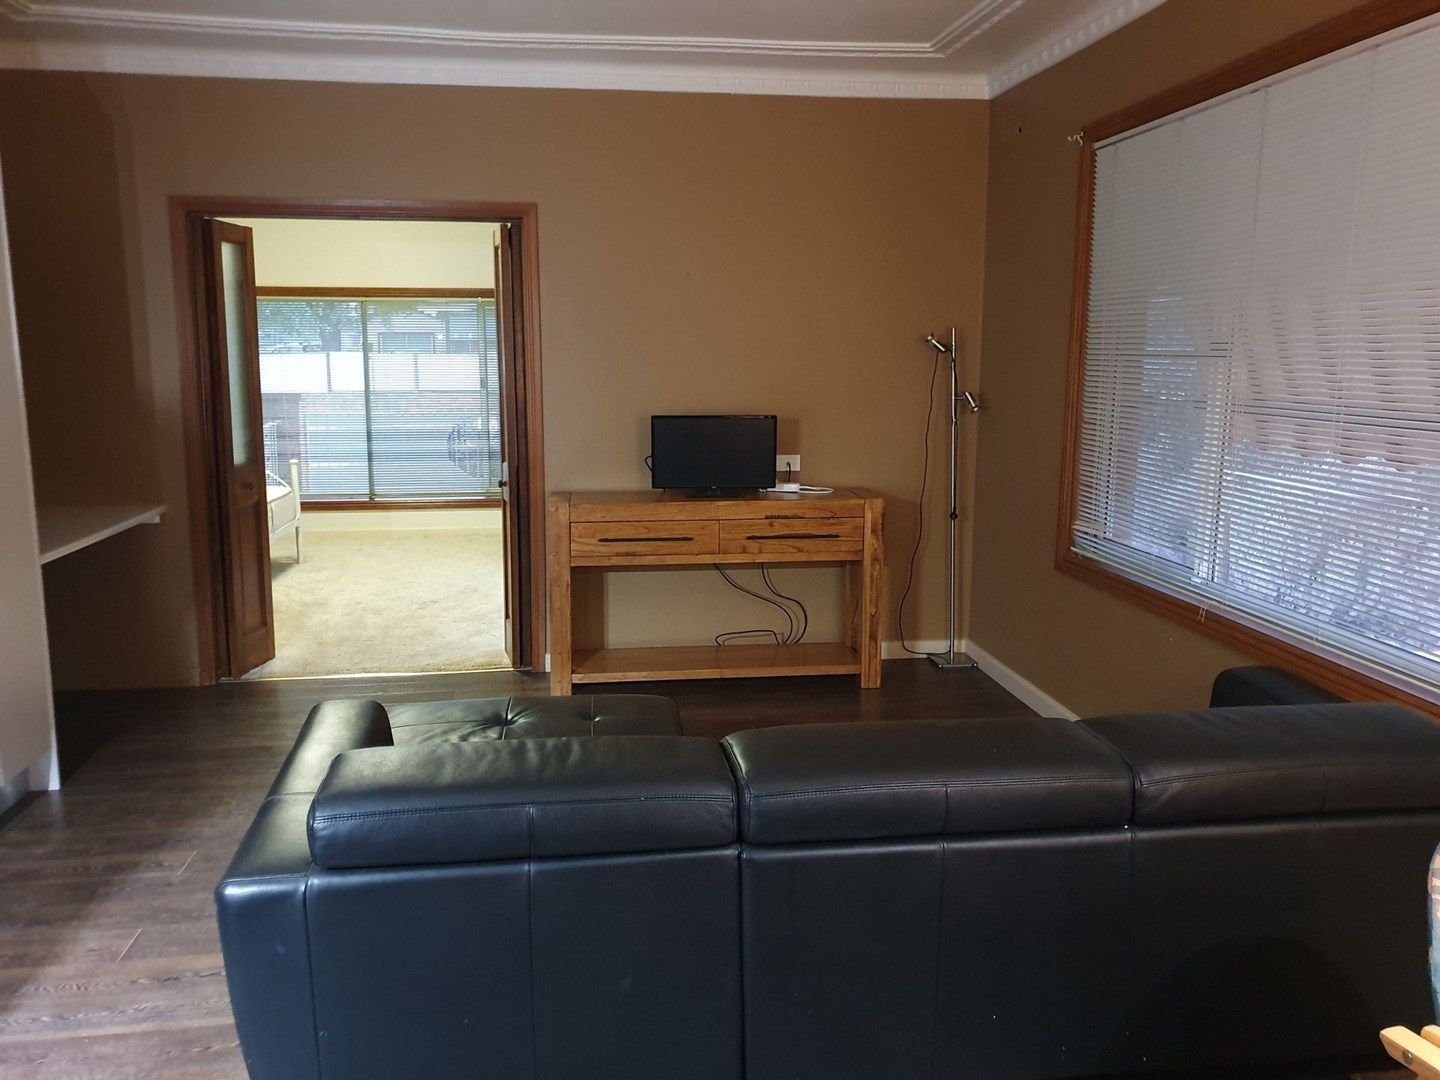 2 bedrooms Apartment / Unit / Flat in 156A Cobra St DUBBO NSW, 2830